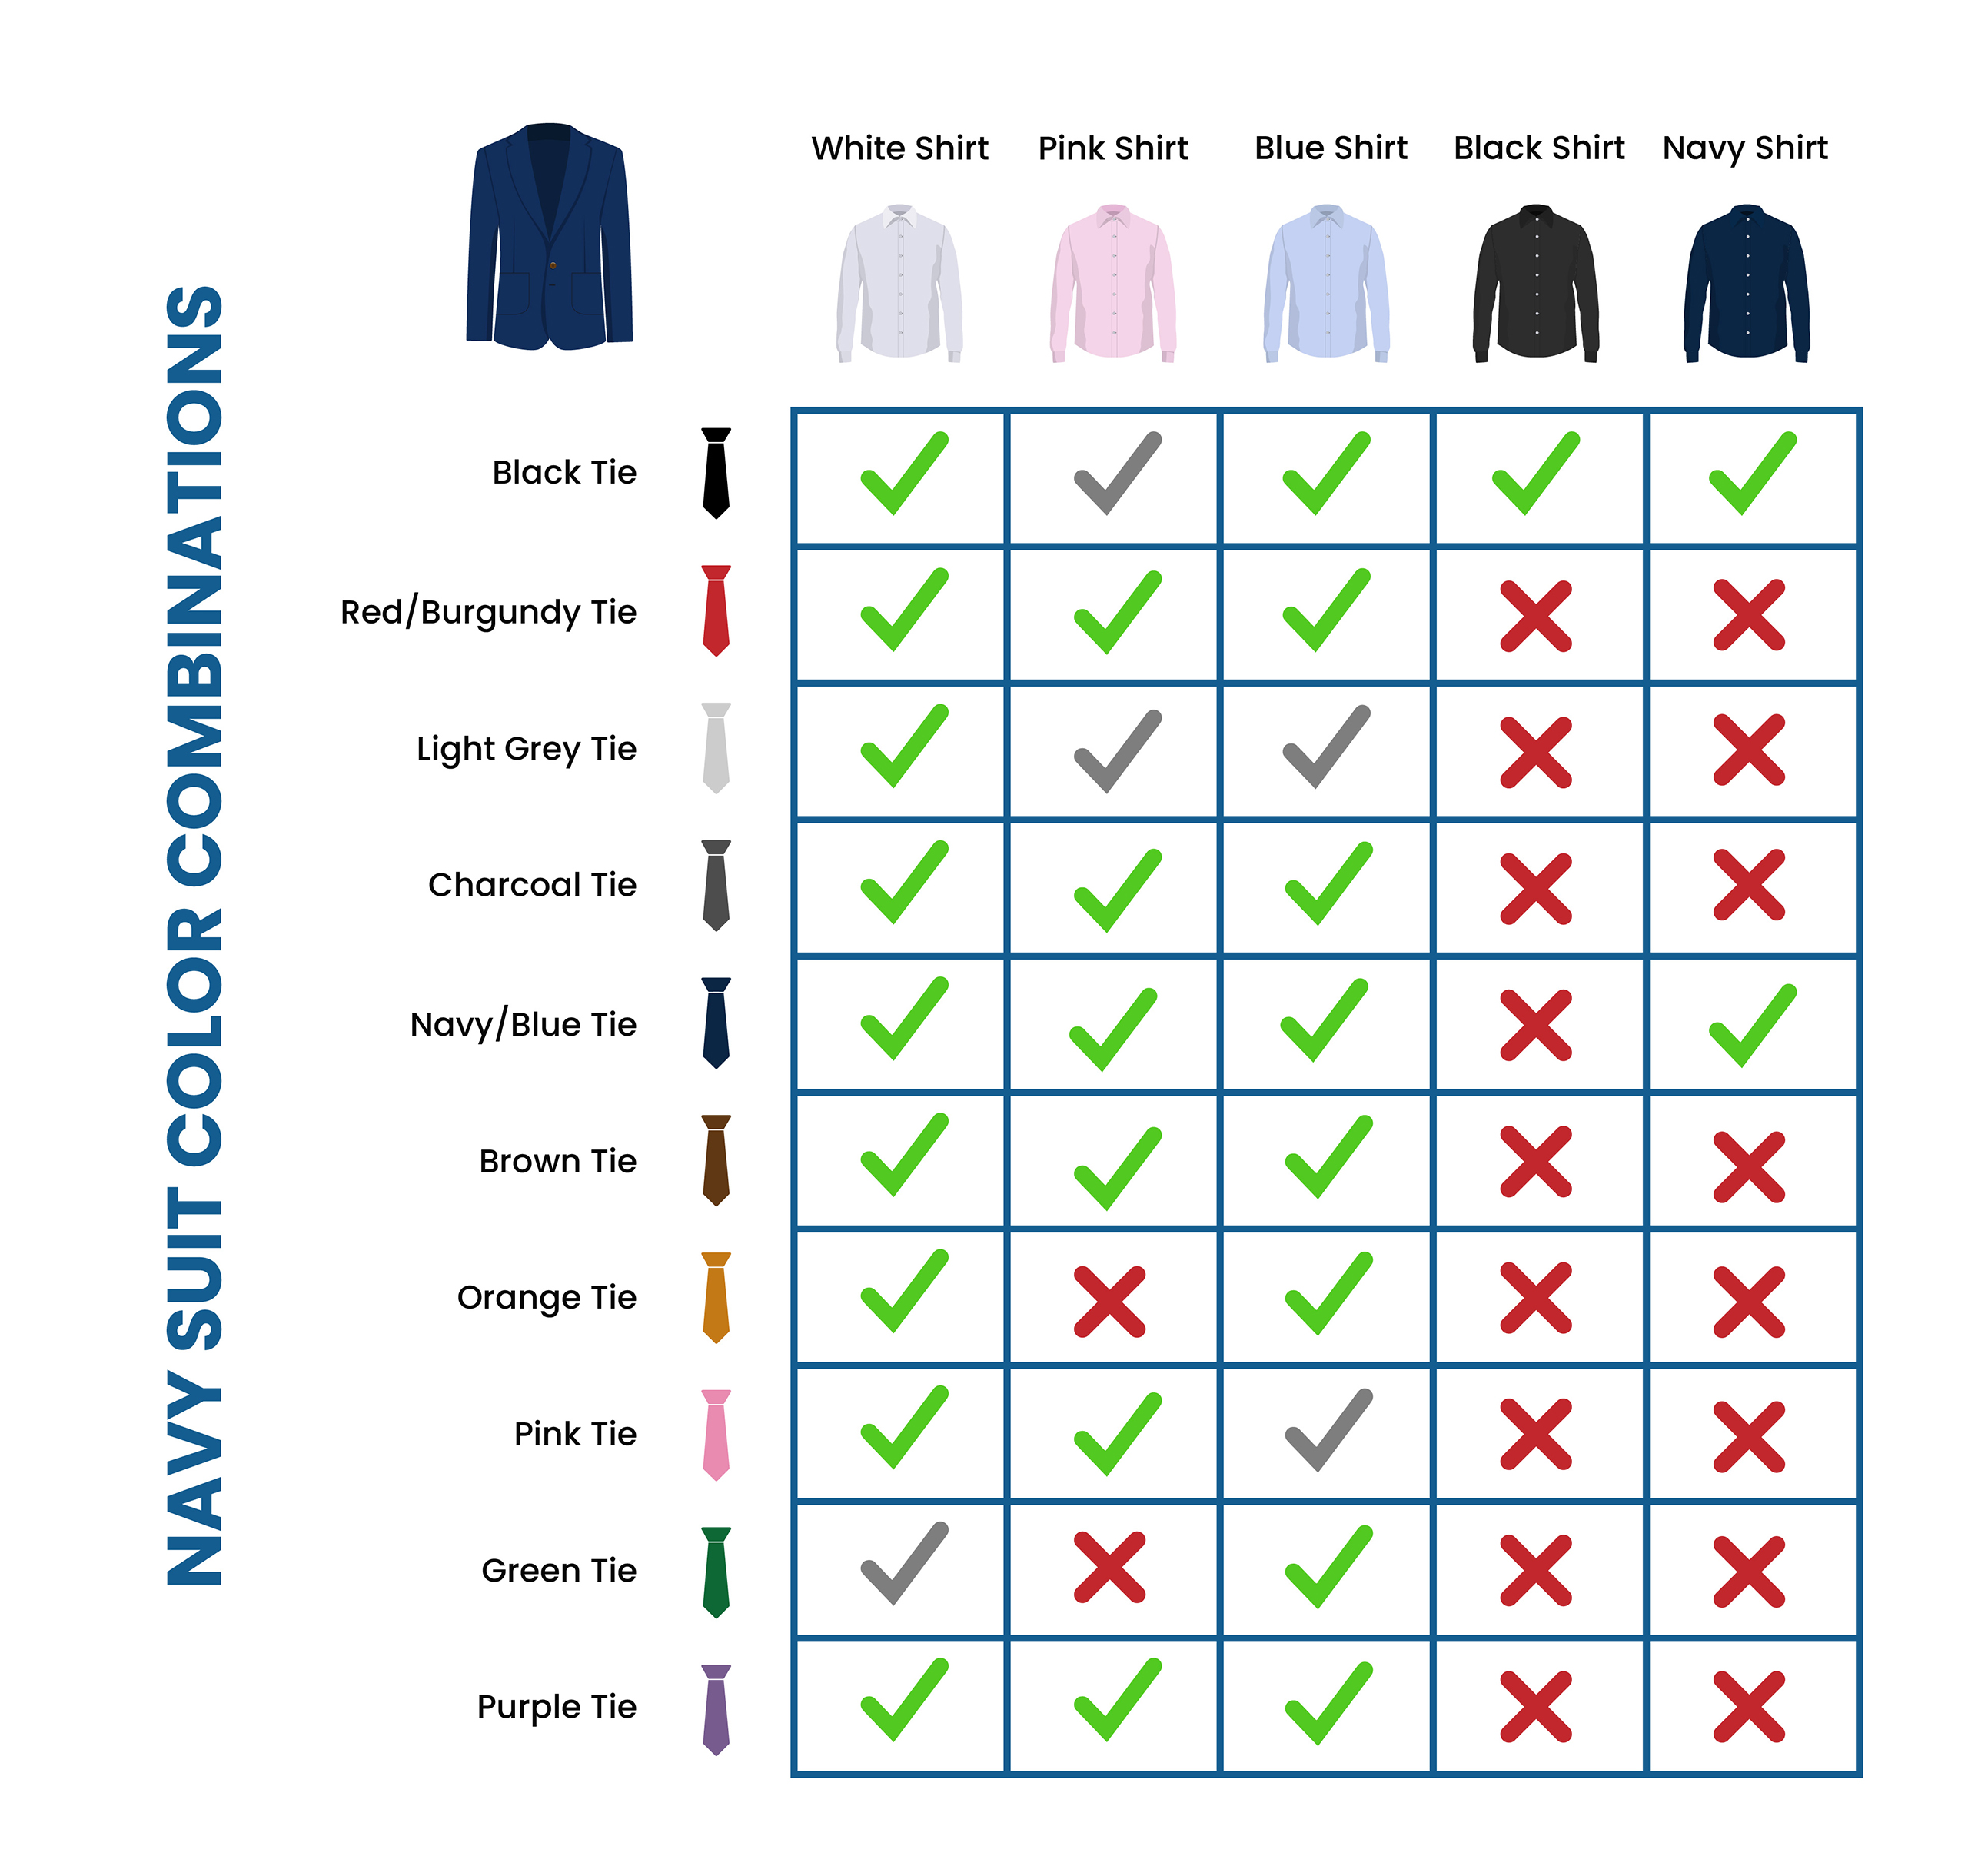 https://www.suitsexpert.com/wp-content/uploads/navy-suit-color-combinations-with-shirt-and-tie.jpg